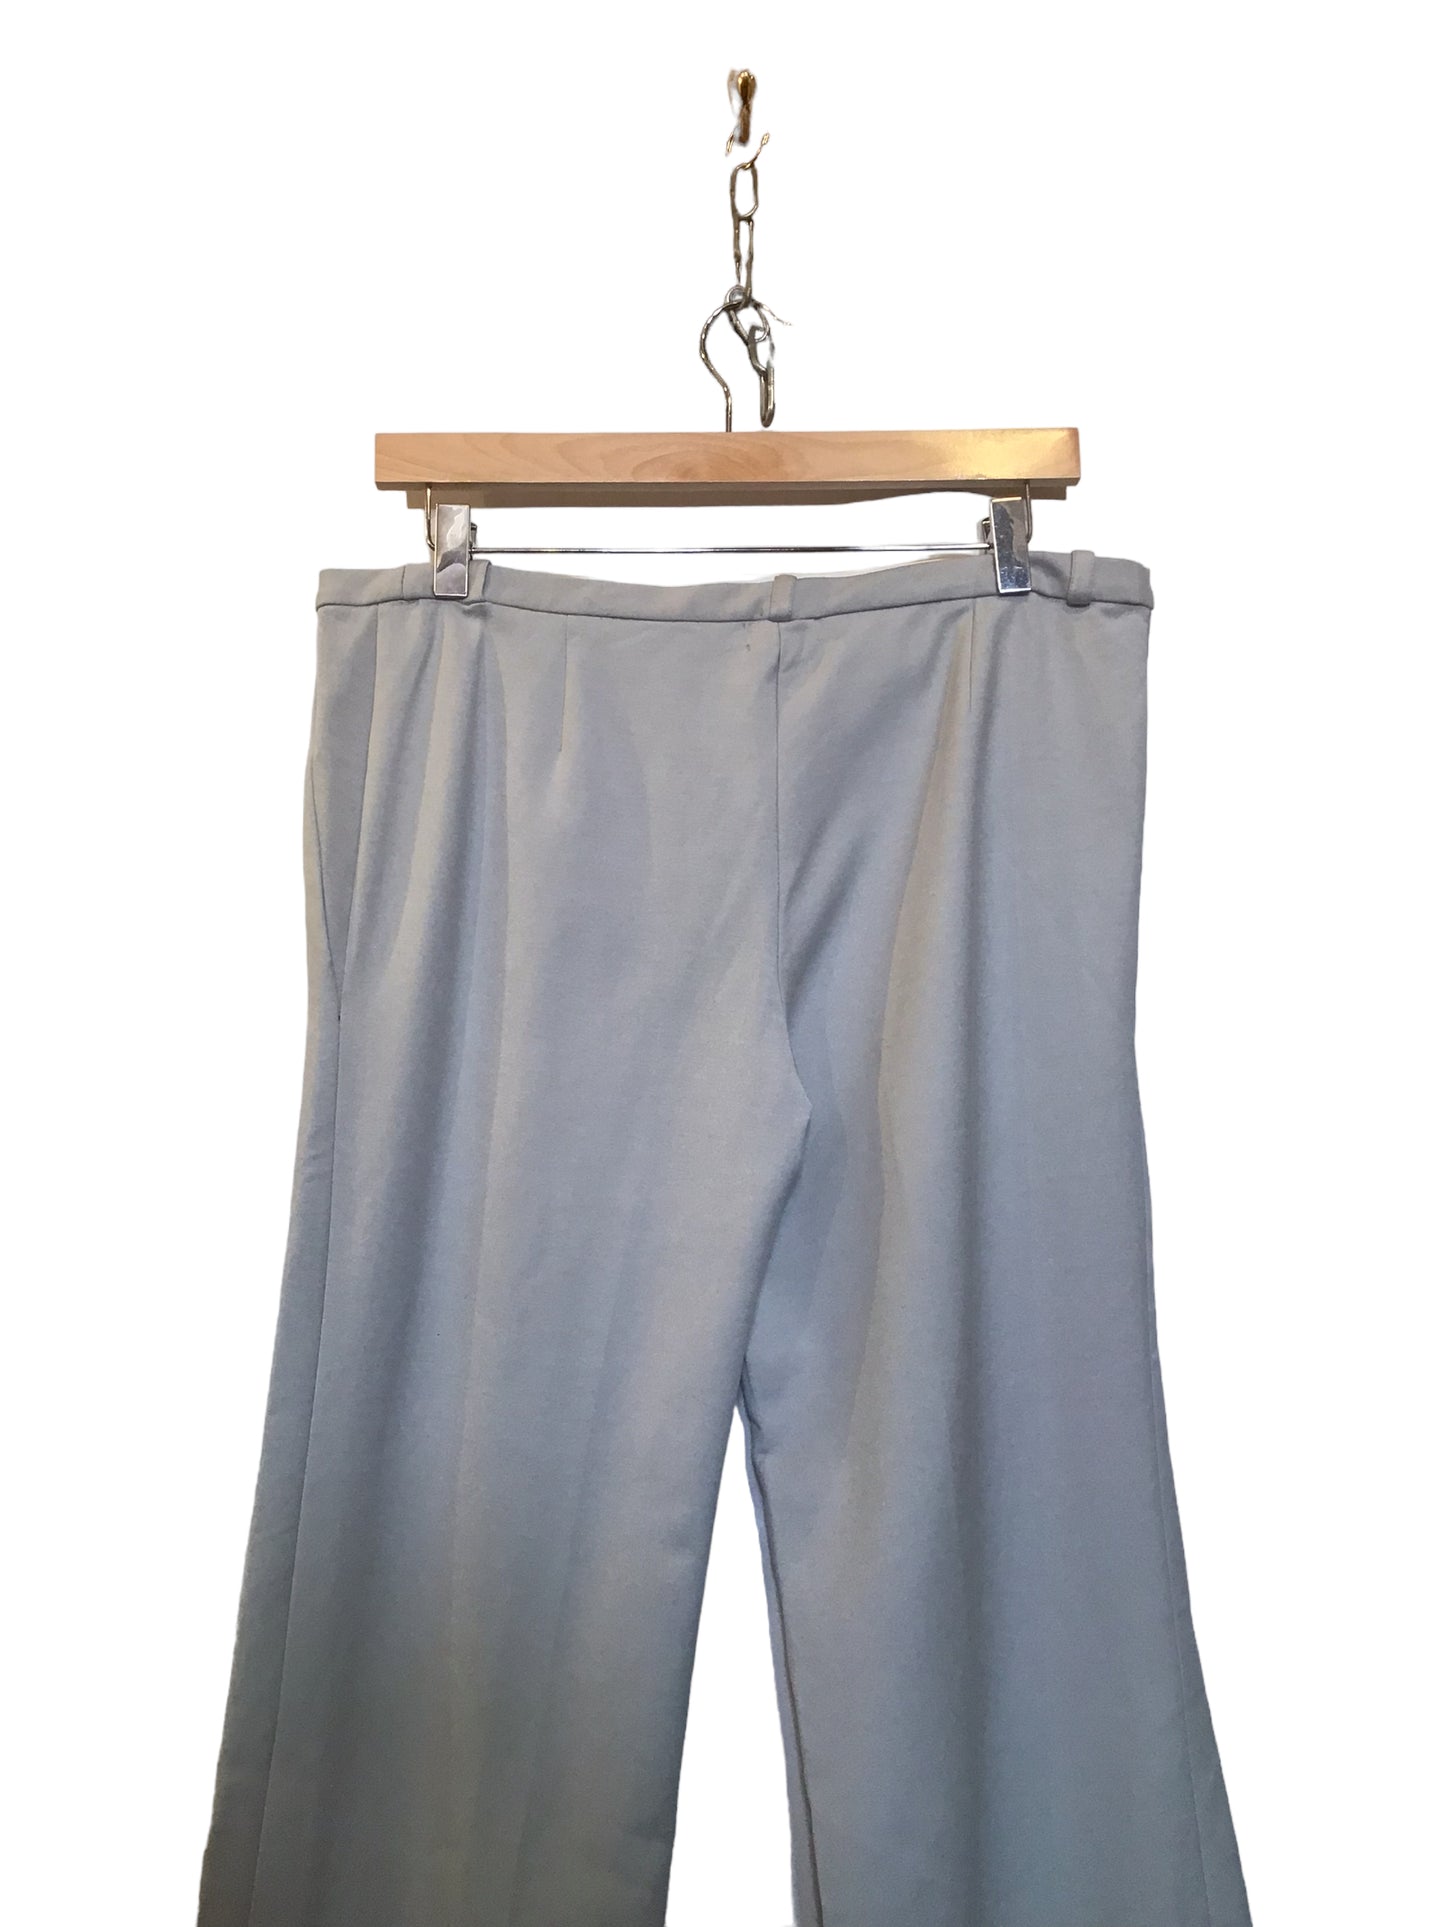 Sadhu Trousers (Size XXL)